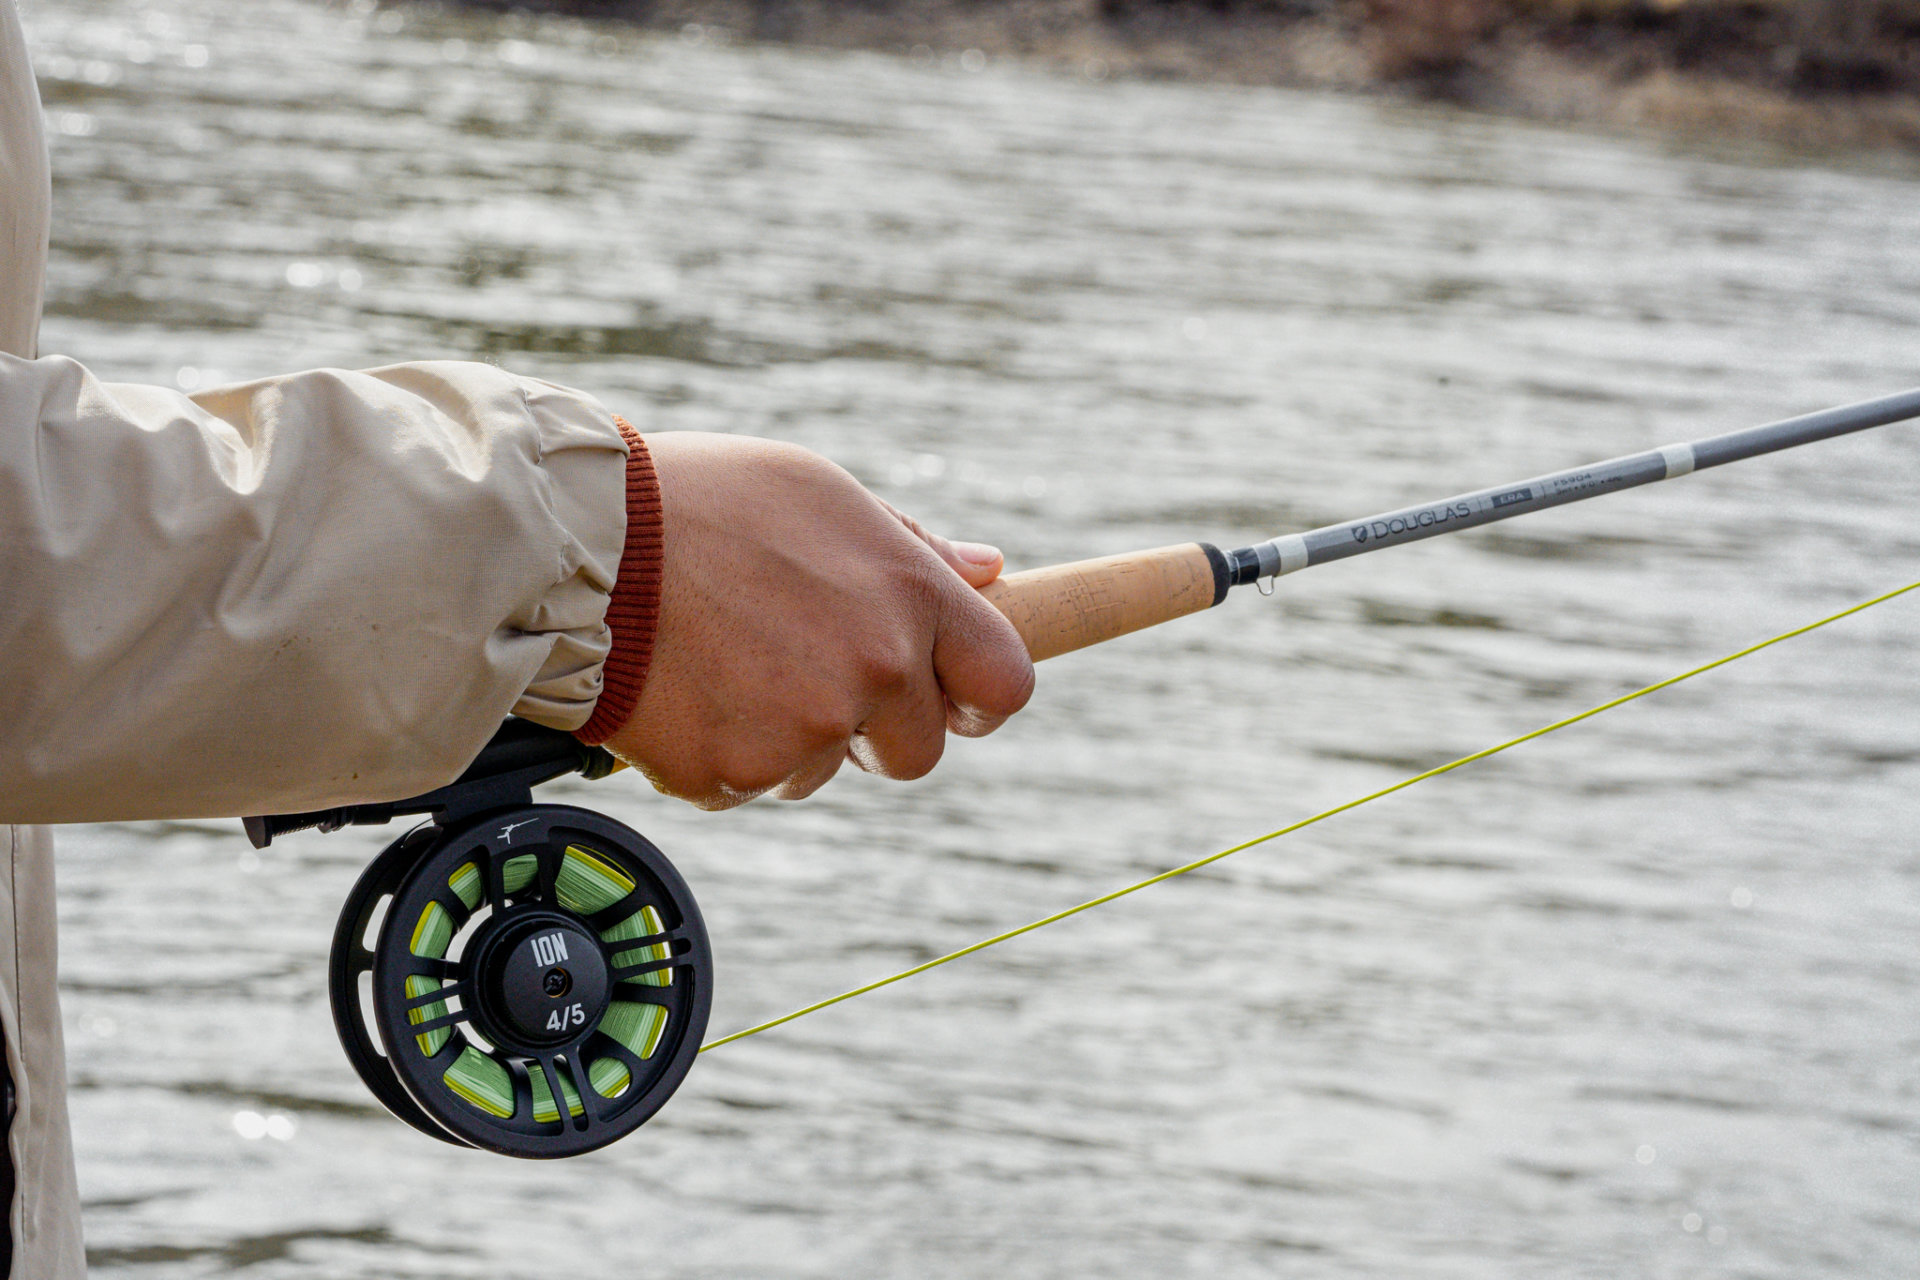 River Fishing Gear - Fly Fishing Gear